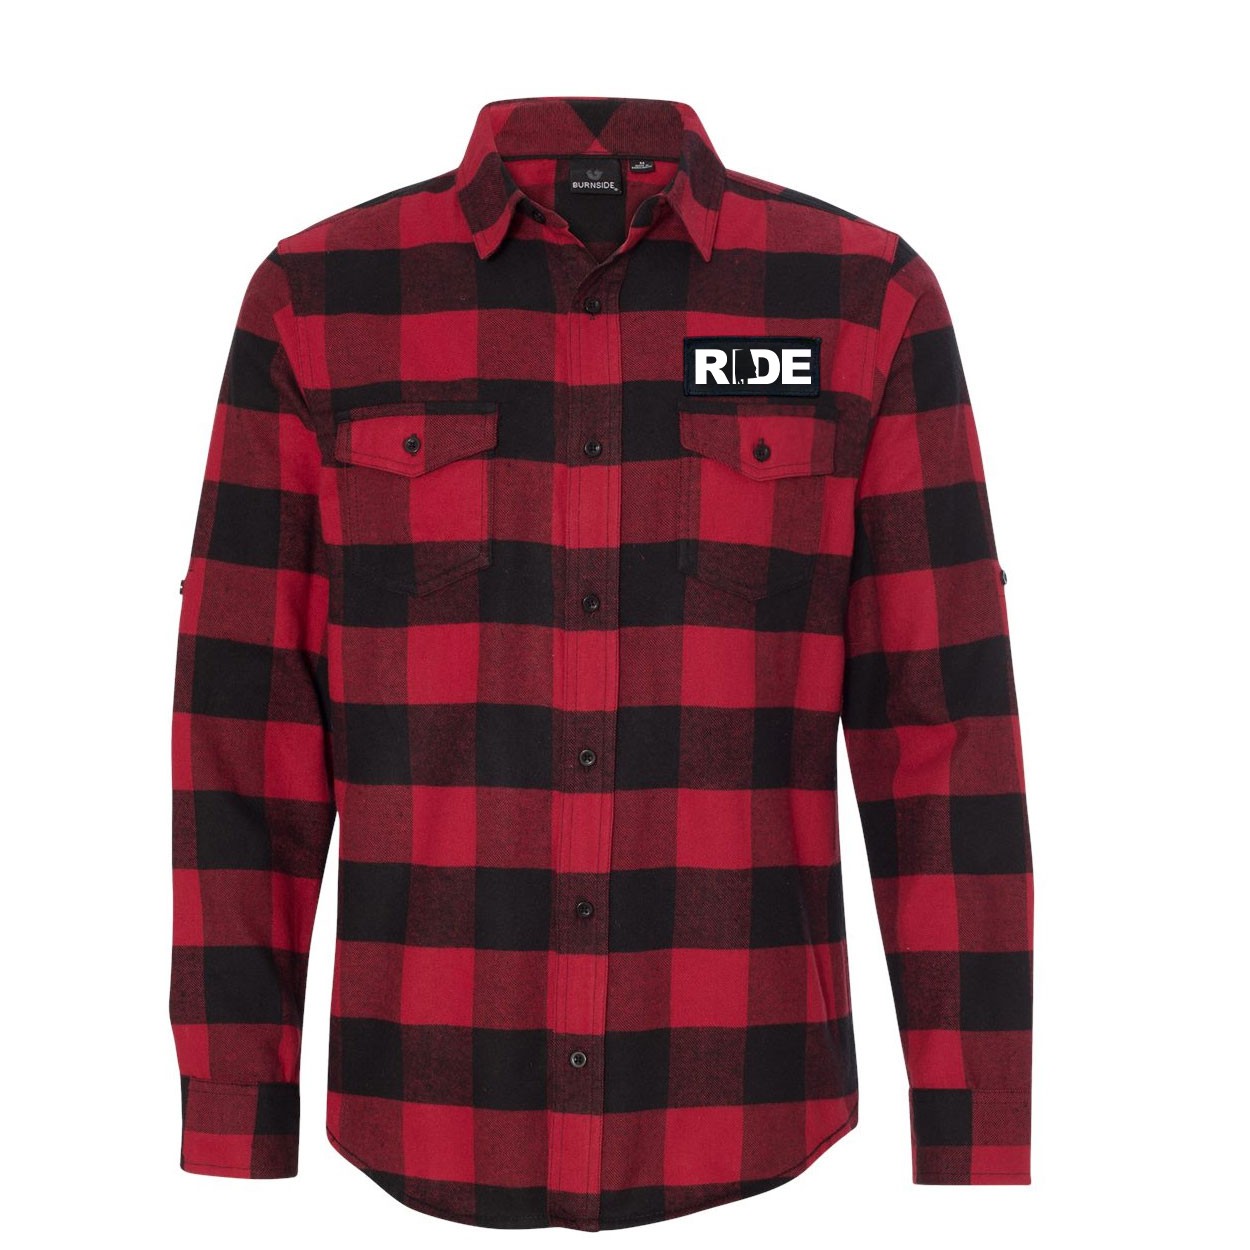 Ride Alabama Classic Unisex Long Sleeve Woven Patch Flannel Shirt Red/Black Buffalo (White Logo)